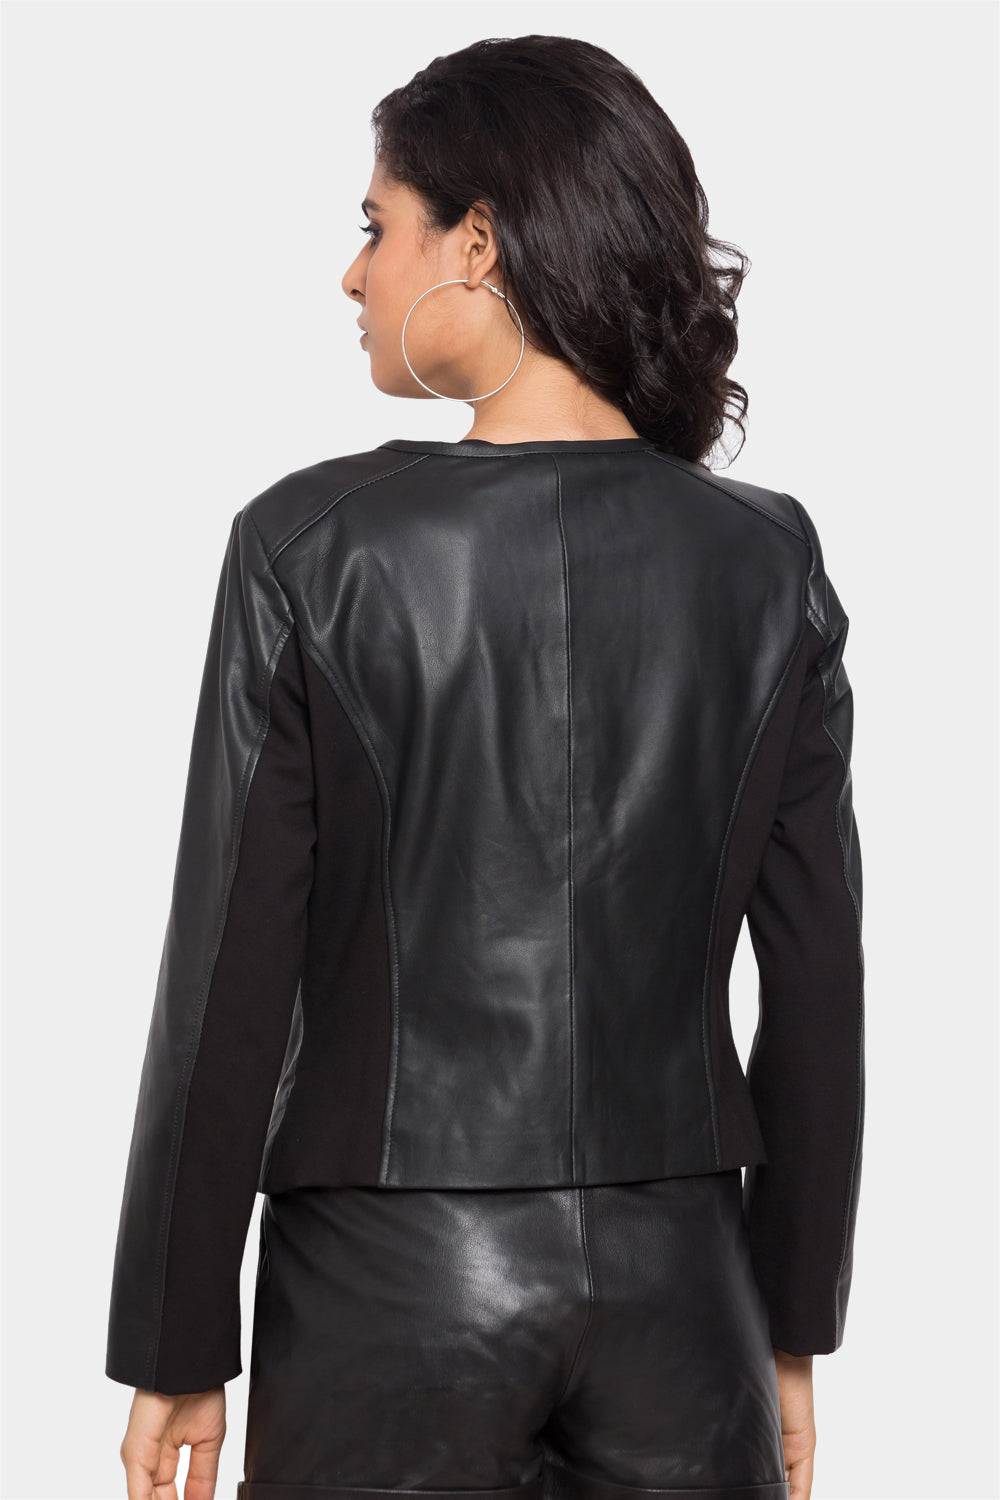 "Justblack" Skinny Fit Leather Jacket